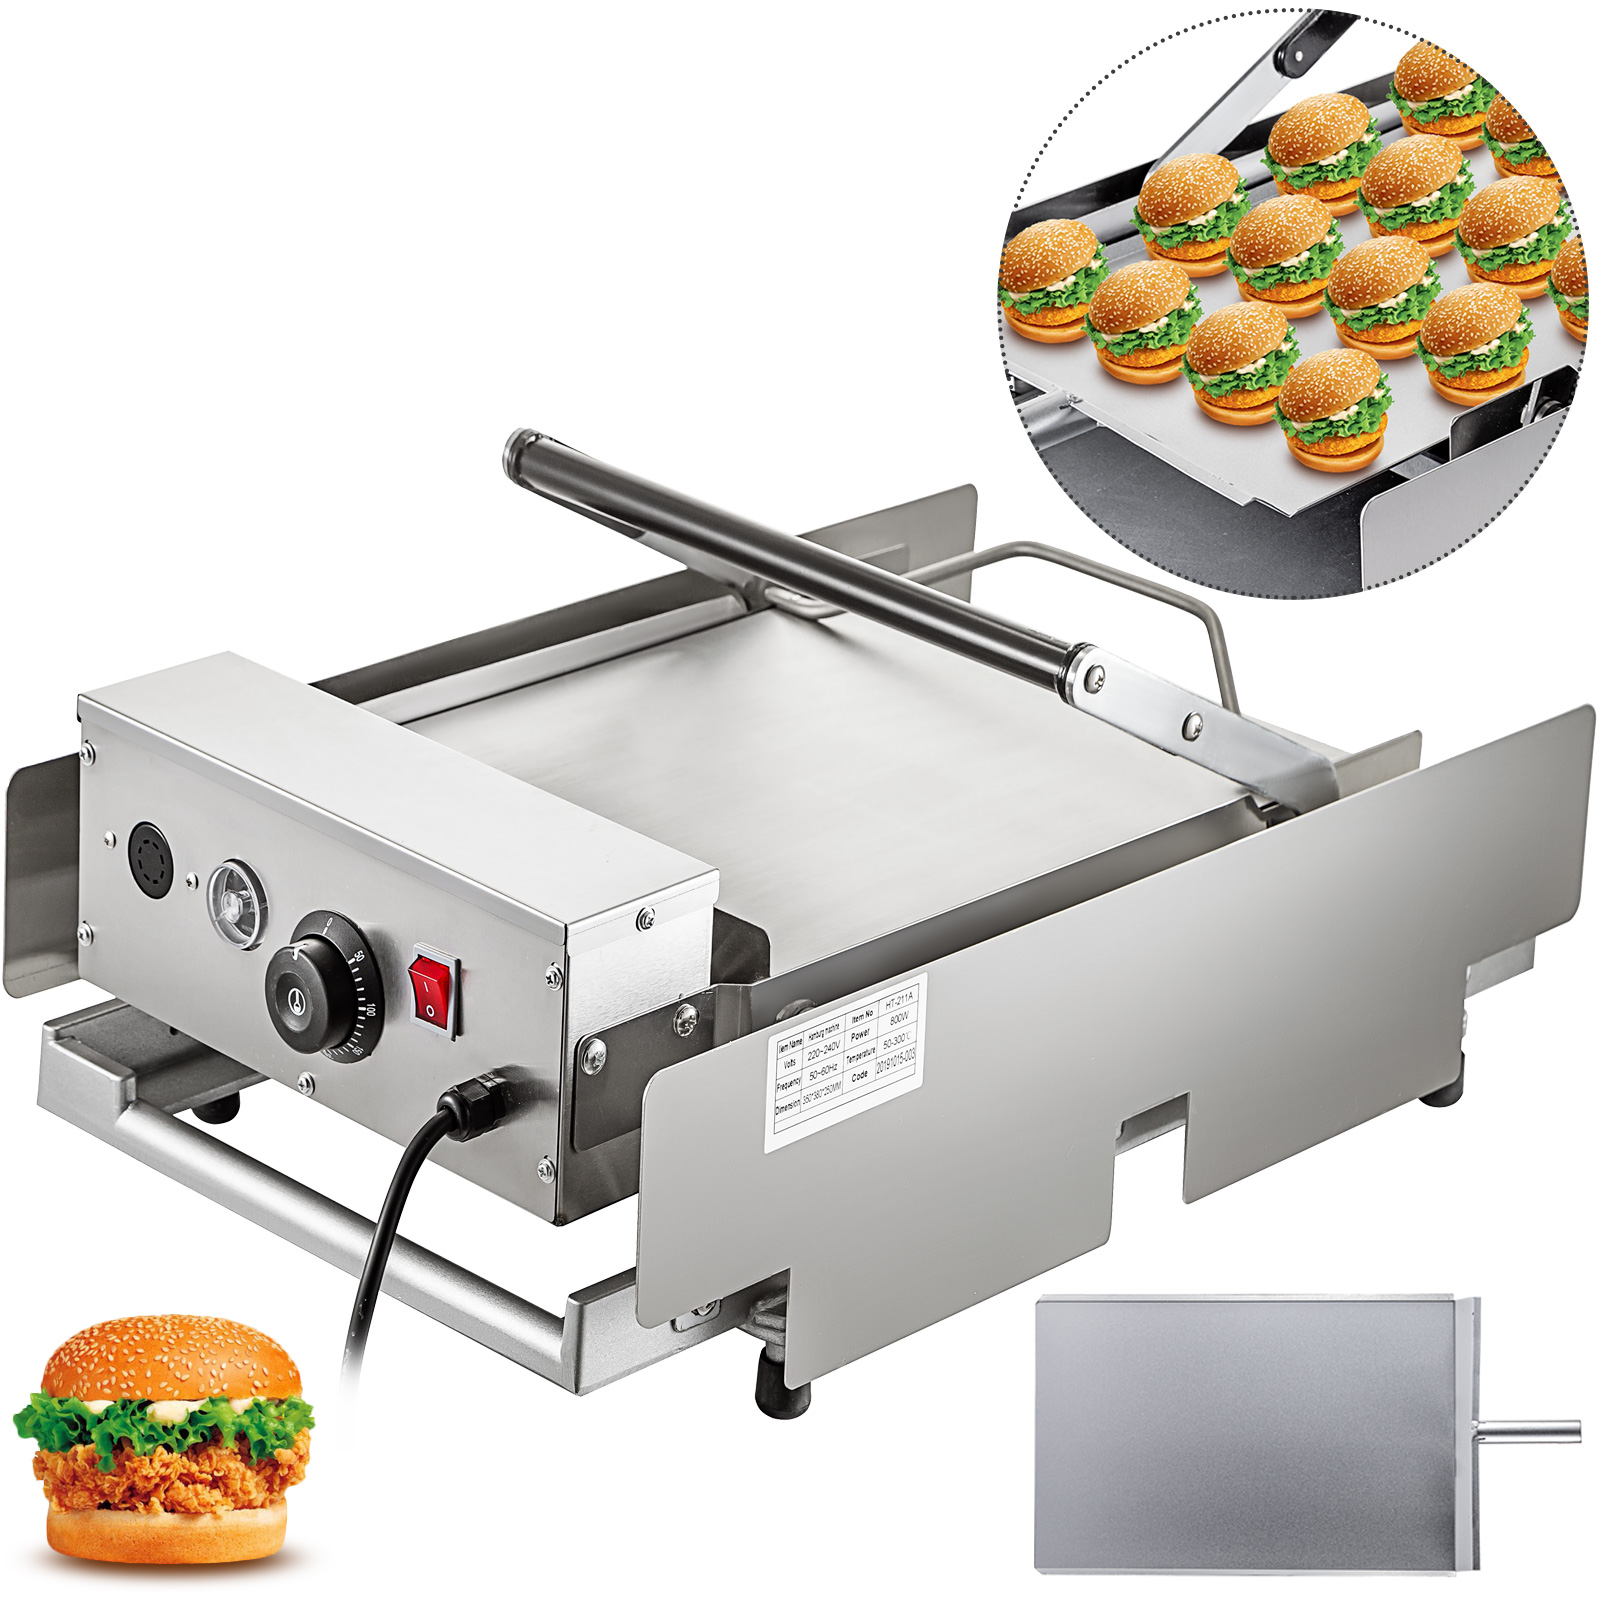 Commercial hamburger maker commercial electric hamburger machine